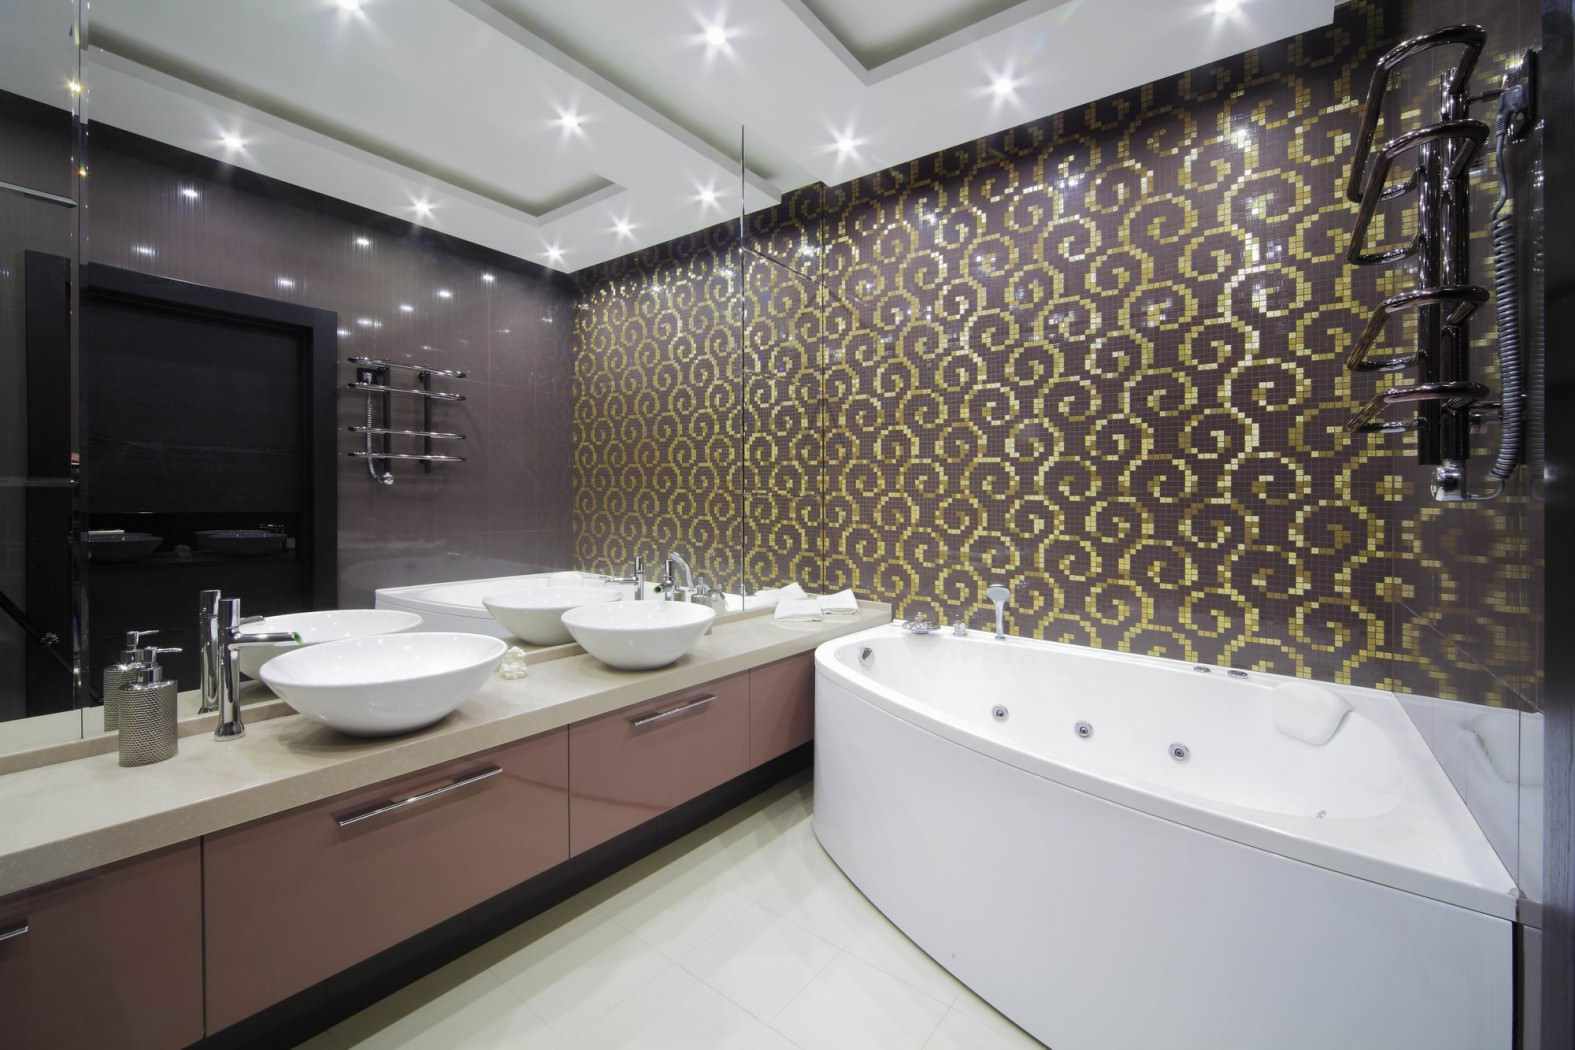 an example of an unusual bathroom design